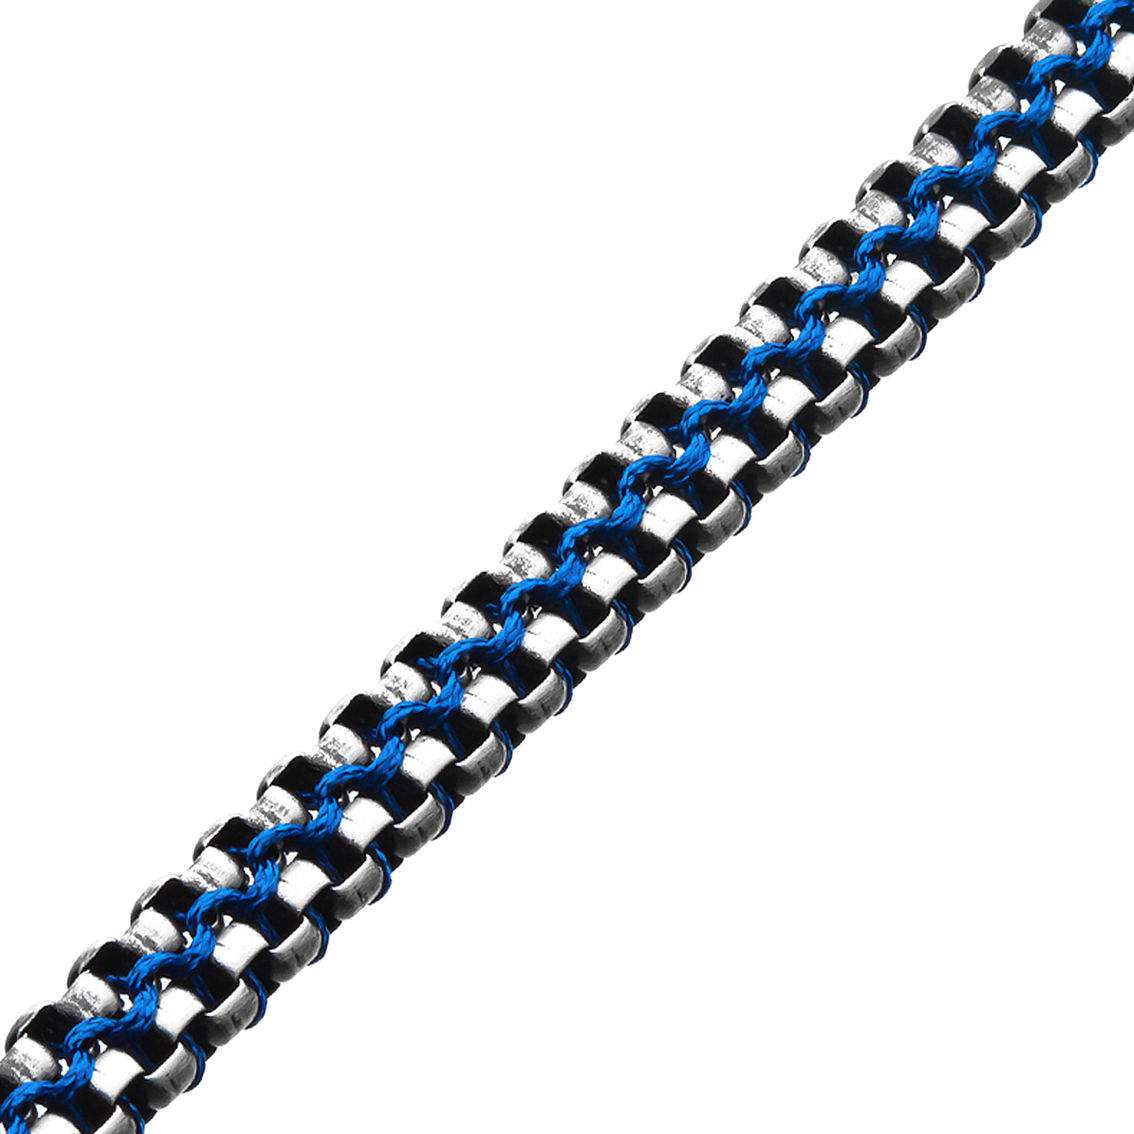 Inox Allegiance Stainless Steel Bracelets - Image 3 of 3